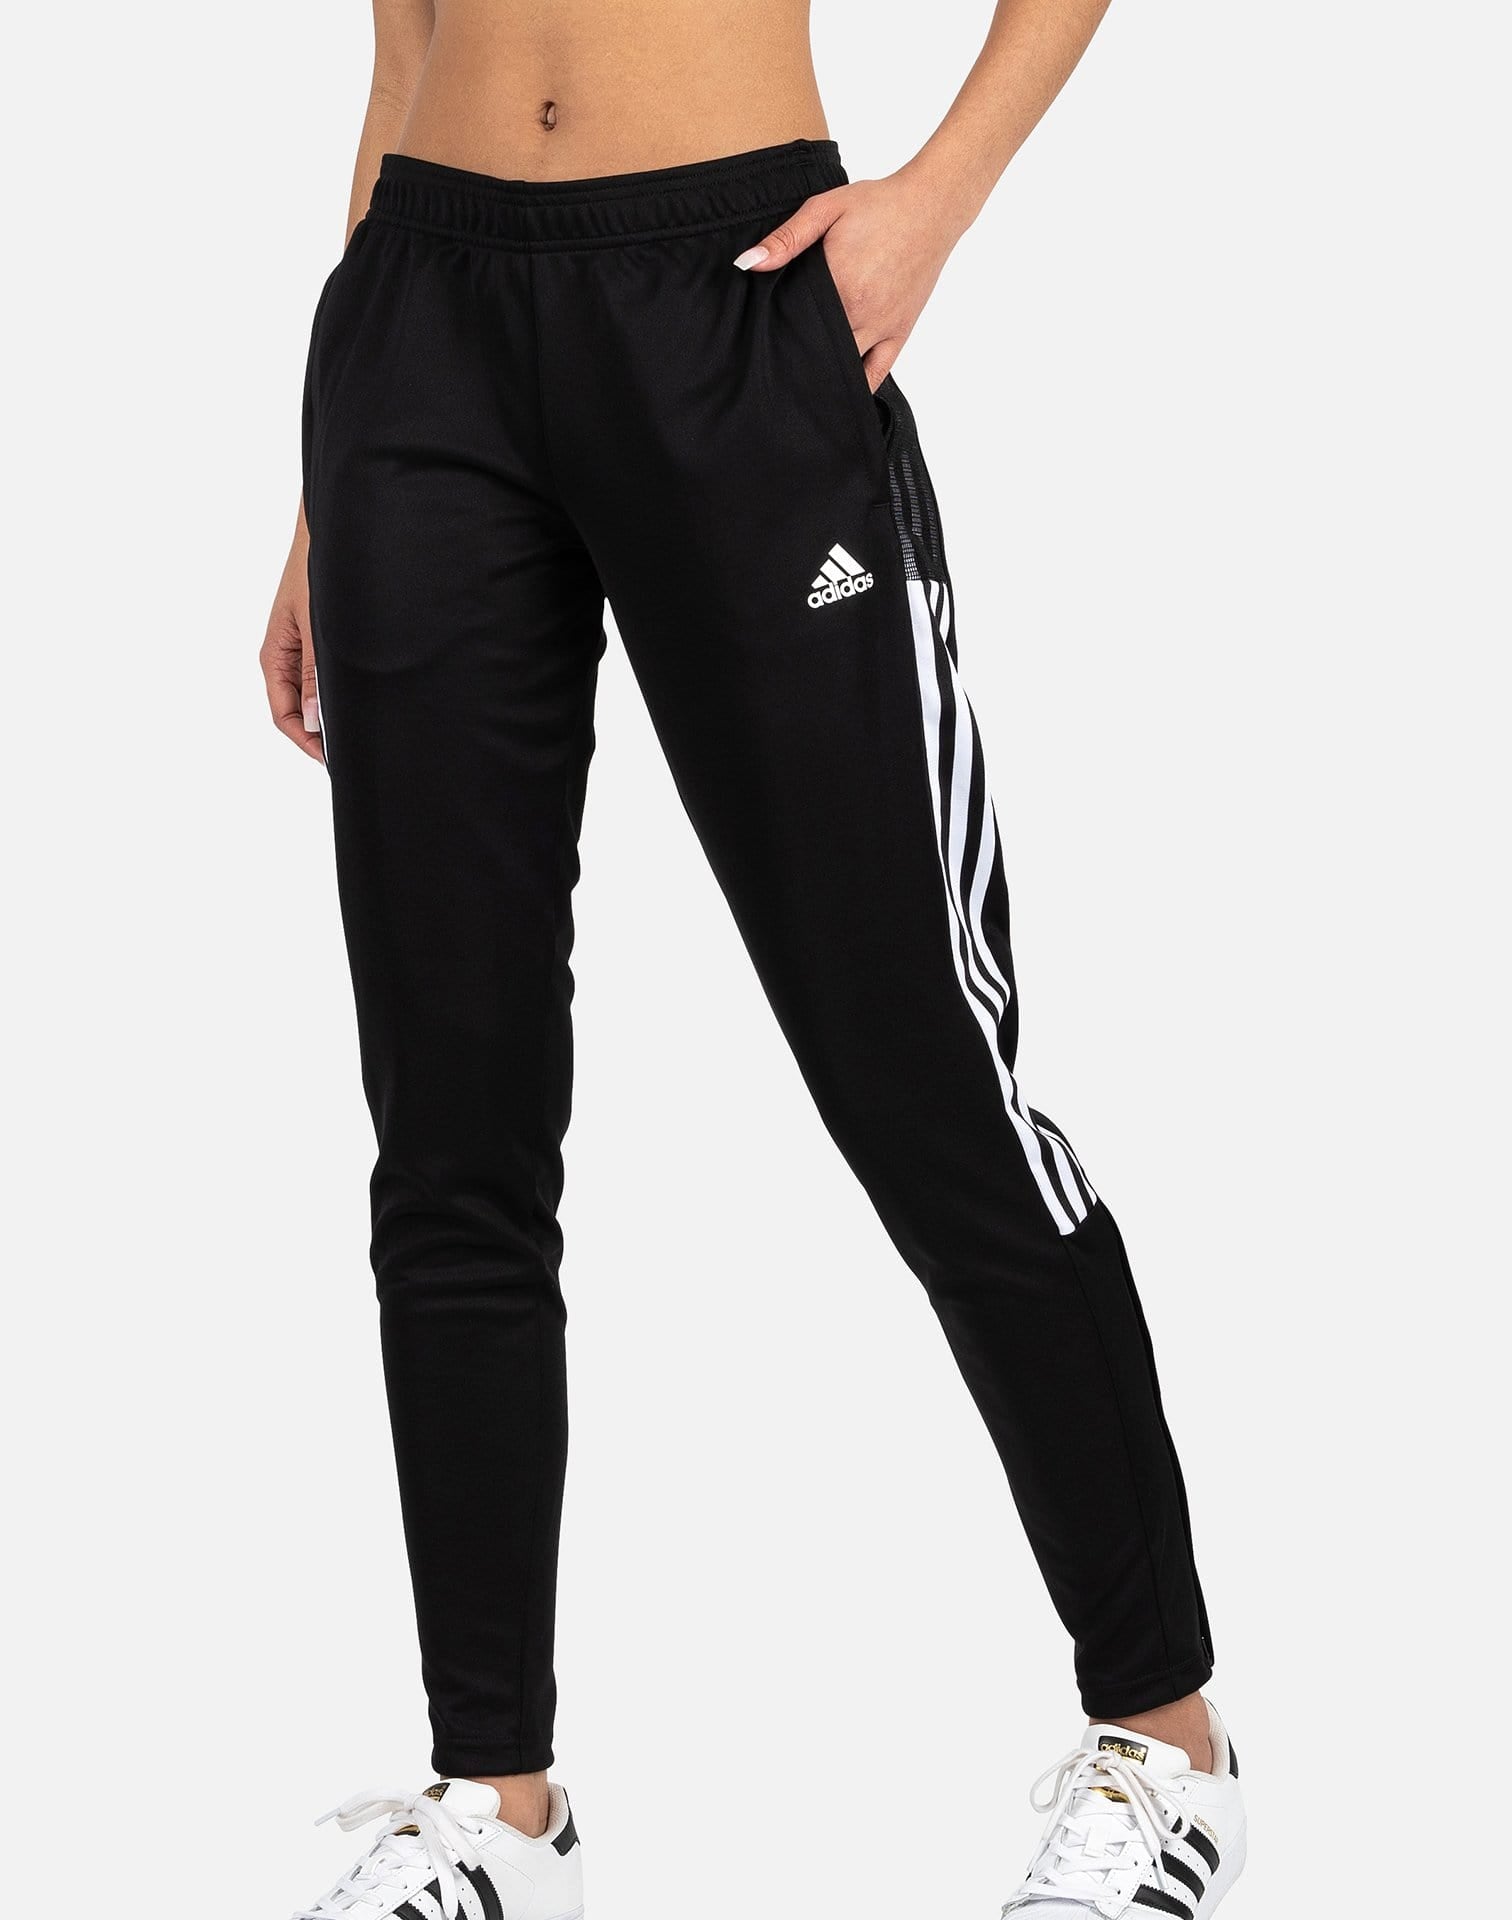 Adidas / Women's Tiro 21 Track Pants